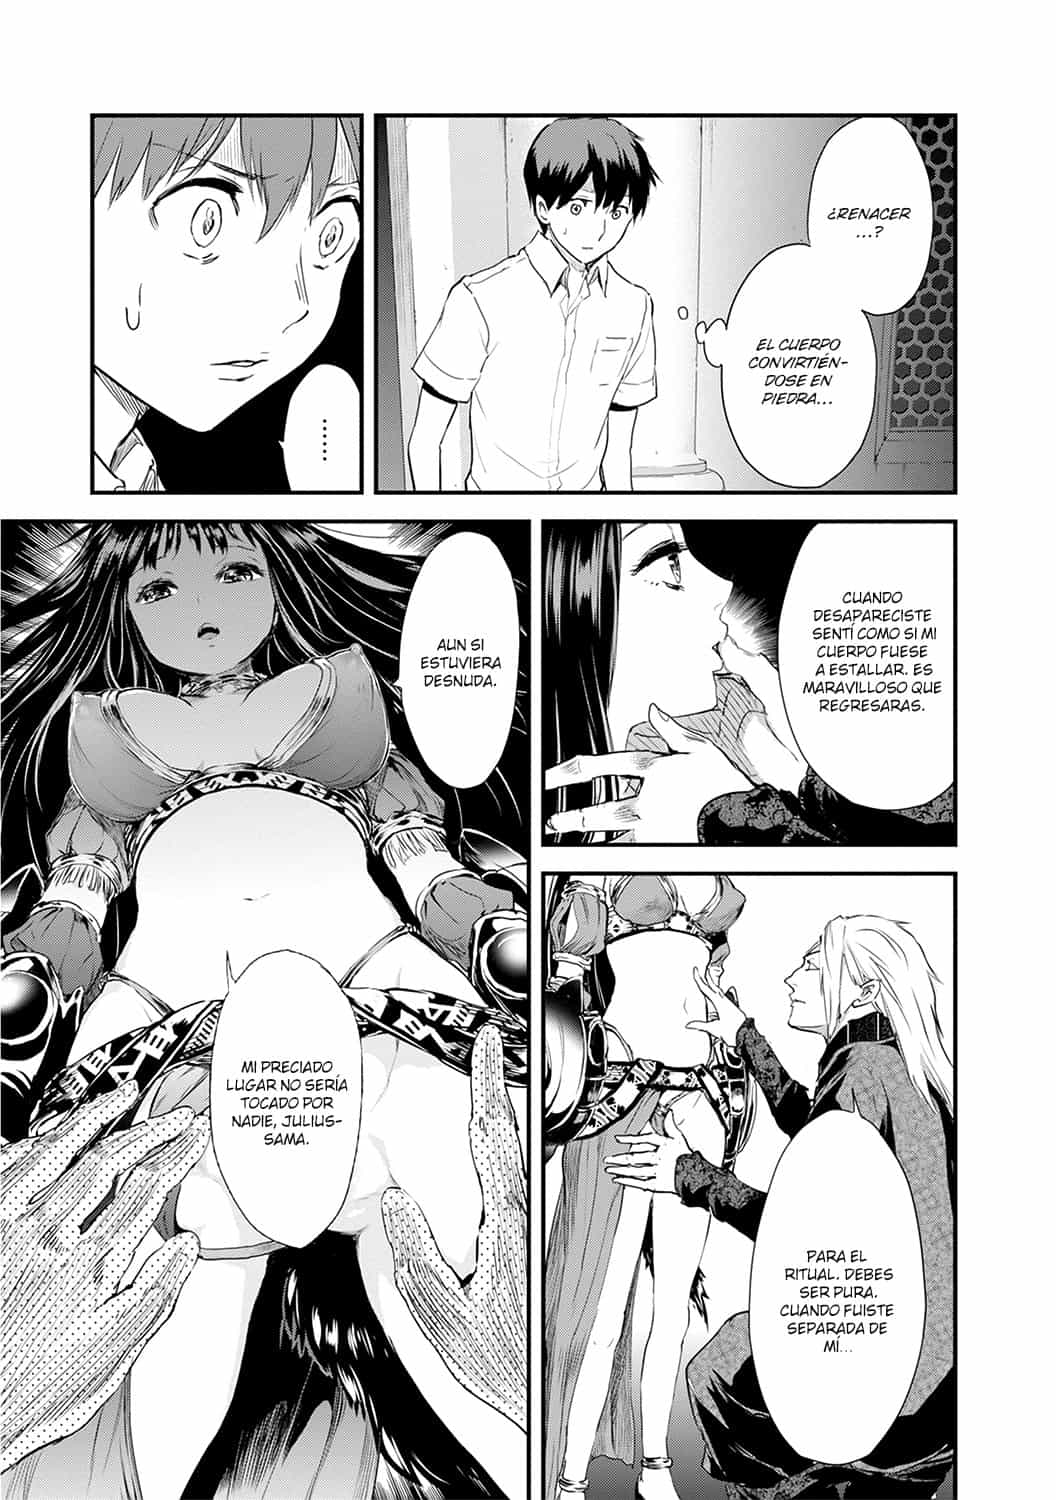 Descargar Alcafus Manga PDF MEGA Imagen